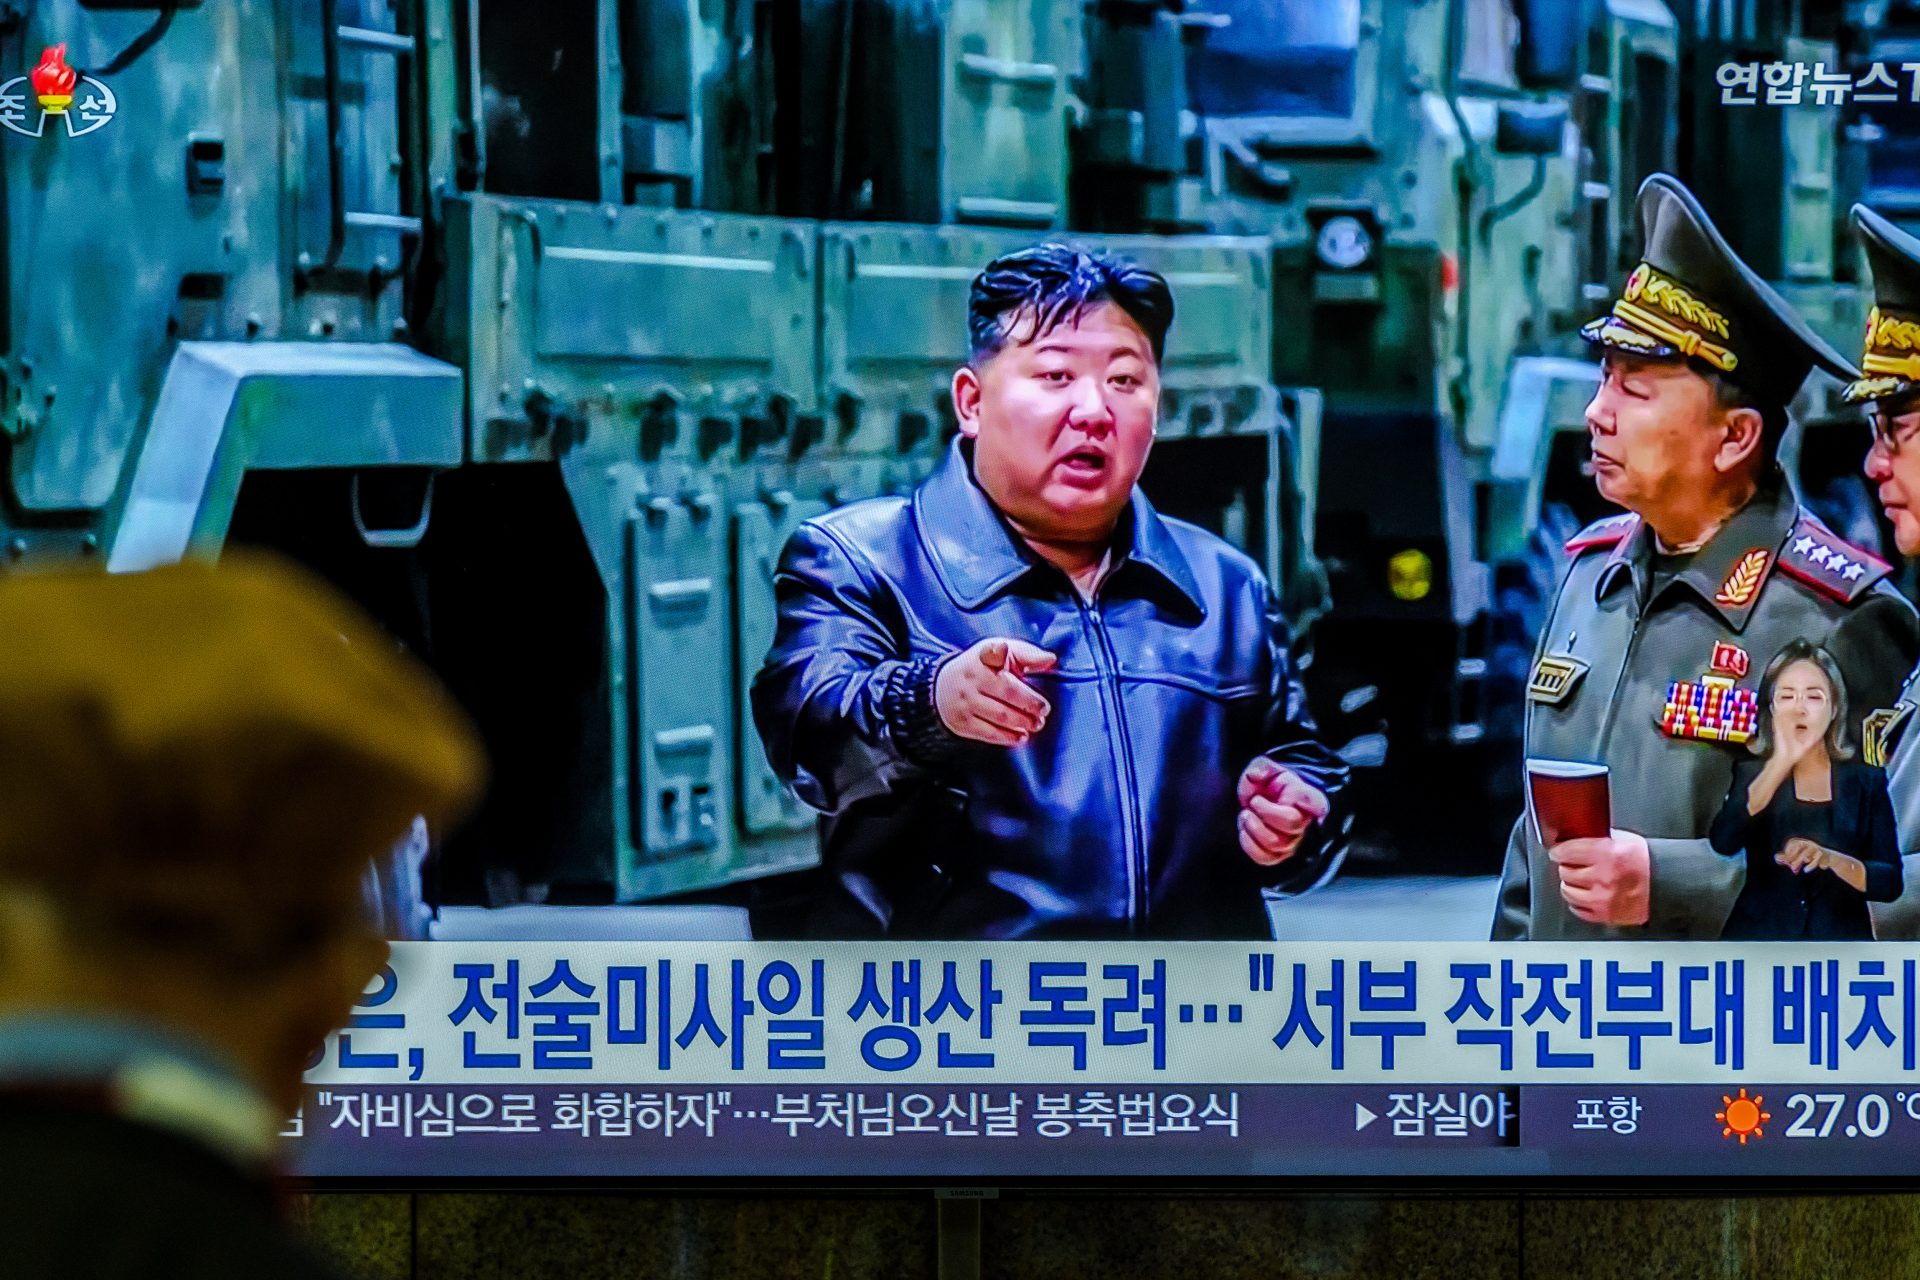 Kim Jong Un wants to annihilate the US